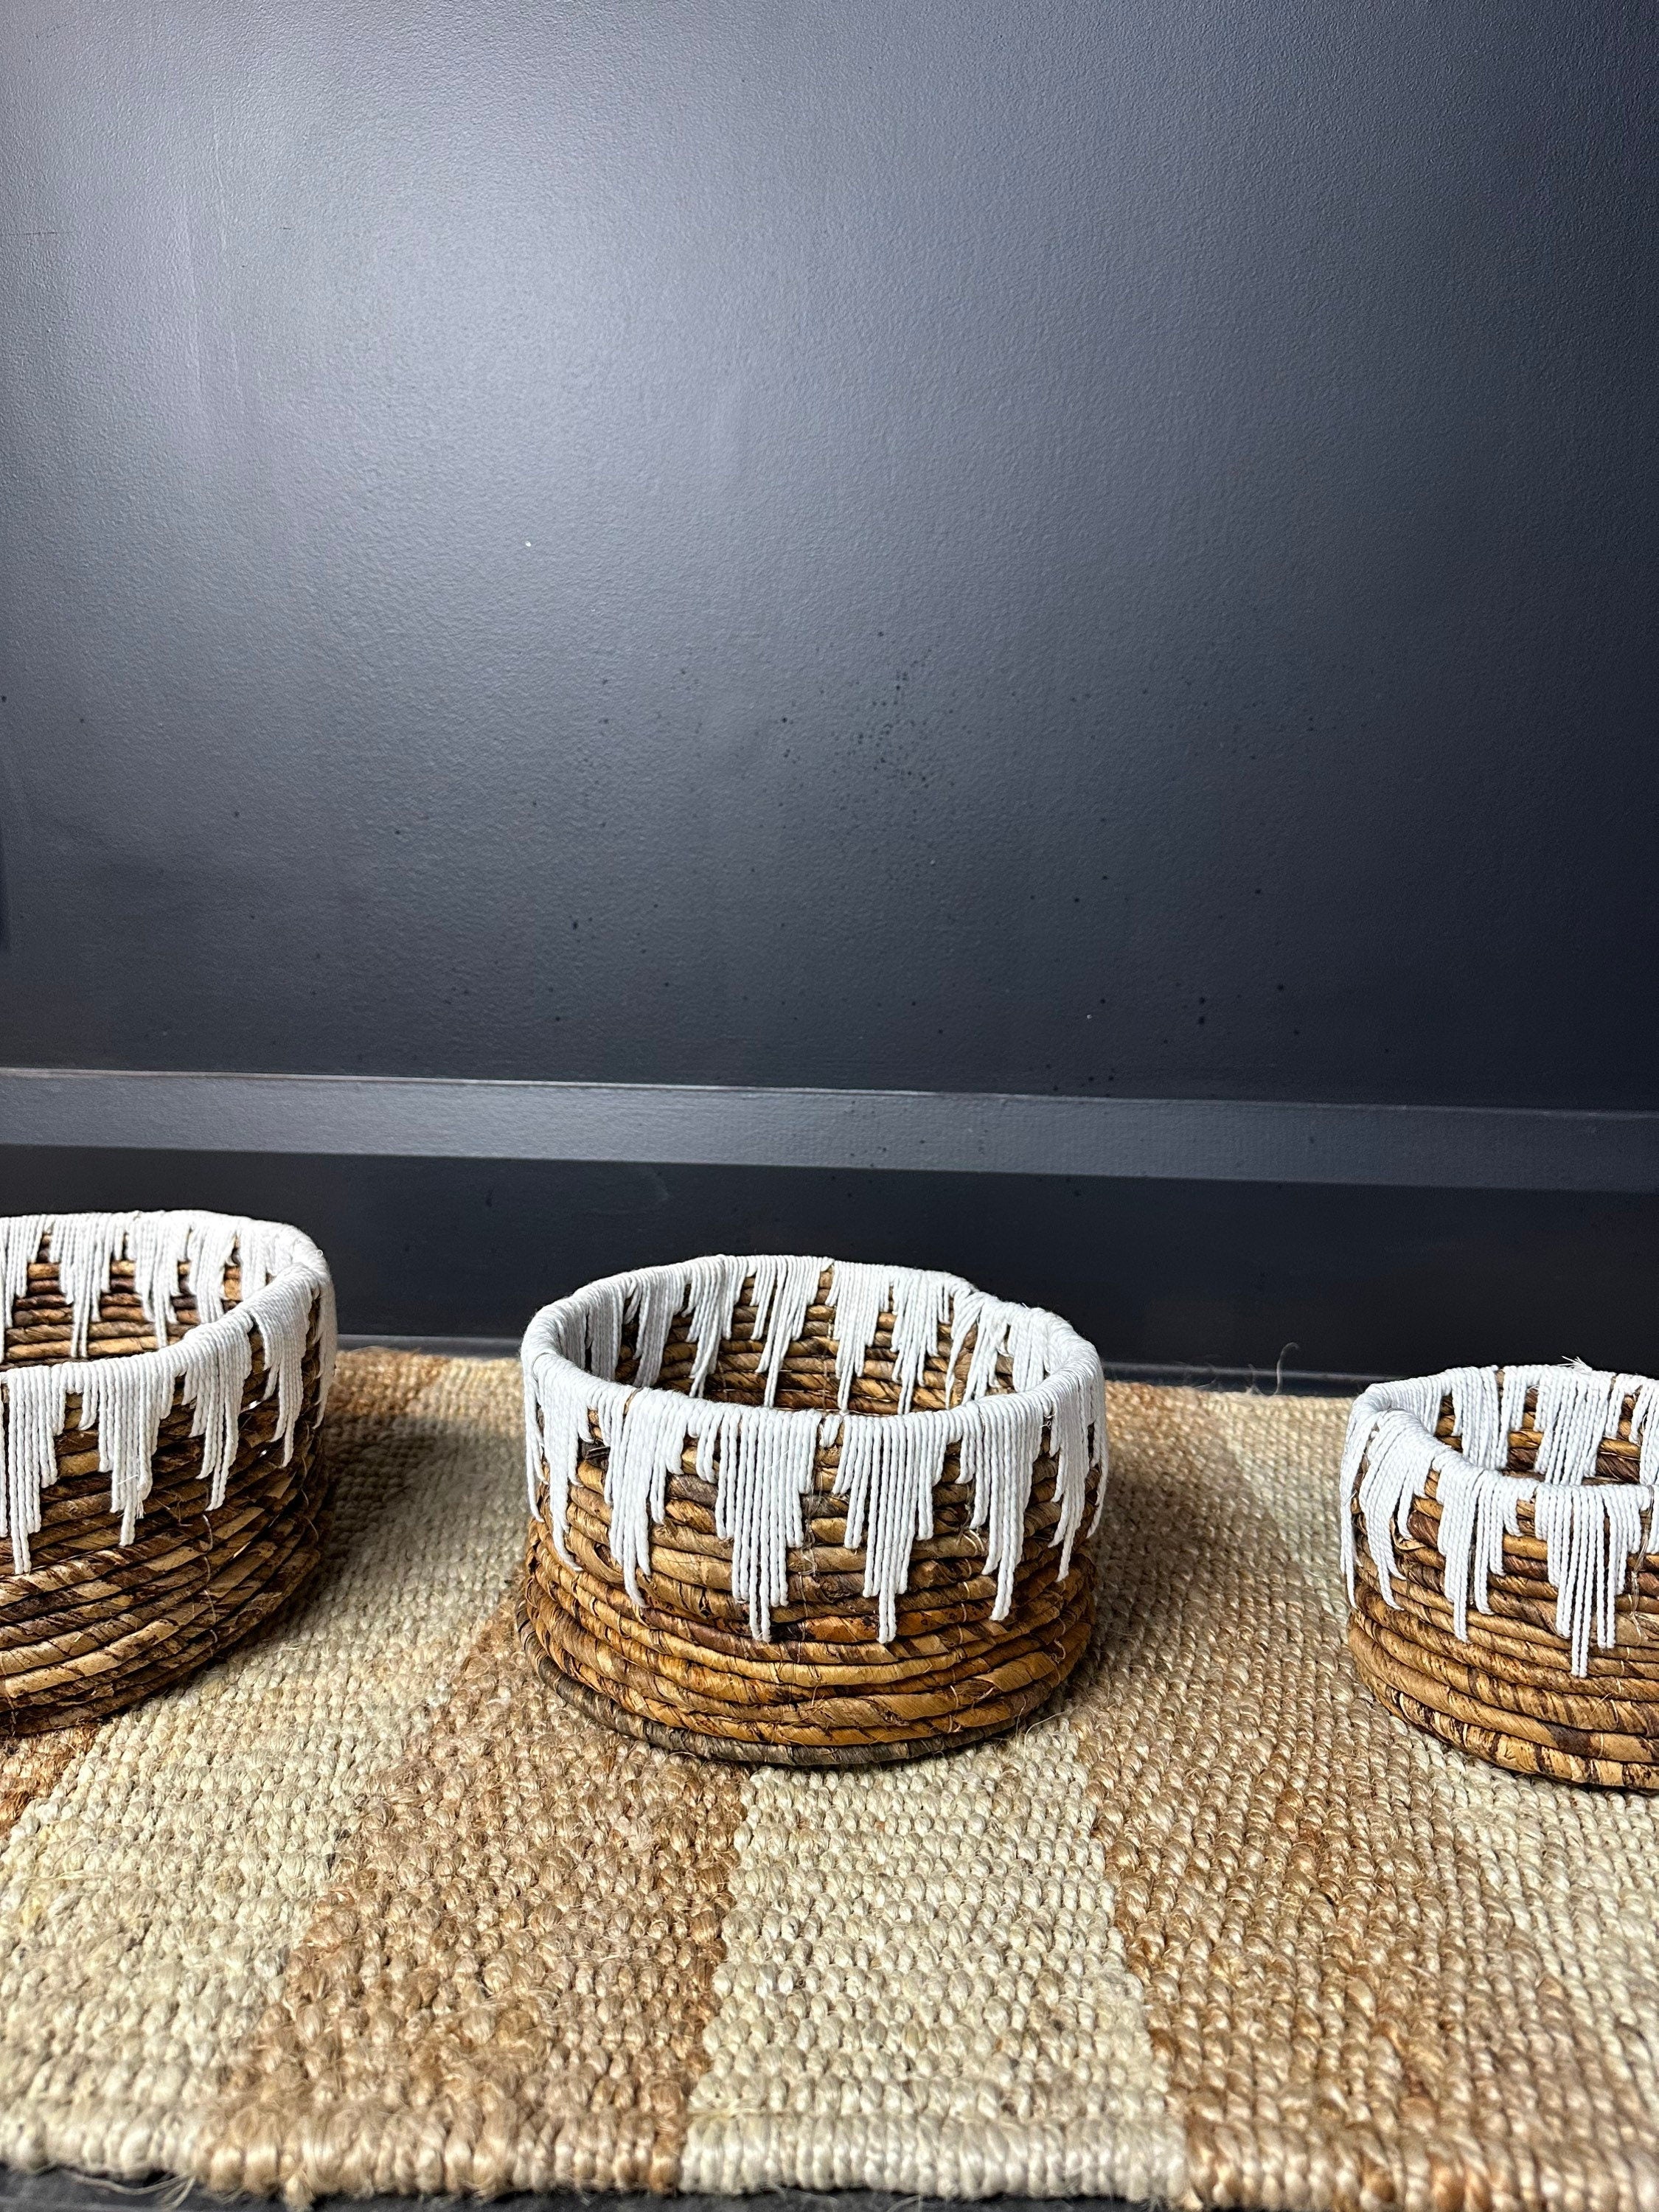 Embroidered Wicker Storage Basket Set of 3, Rattan Cylindrical Holder, Woven Supplies Holder